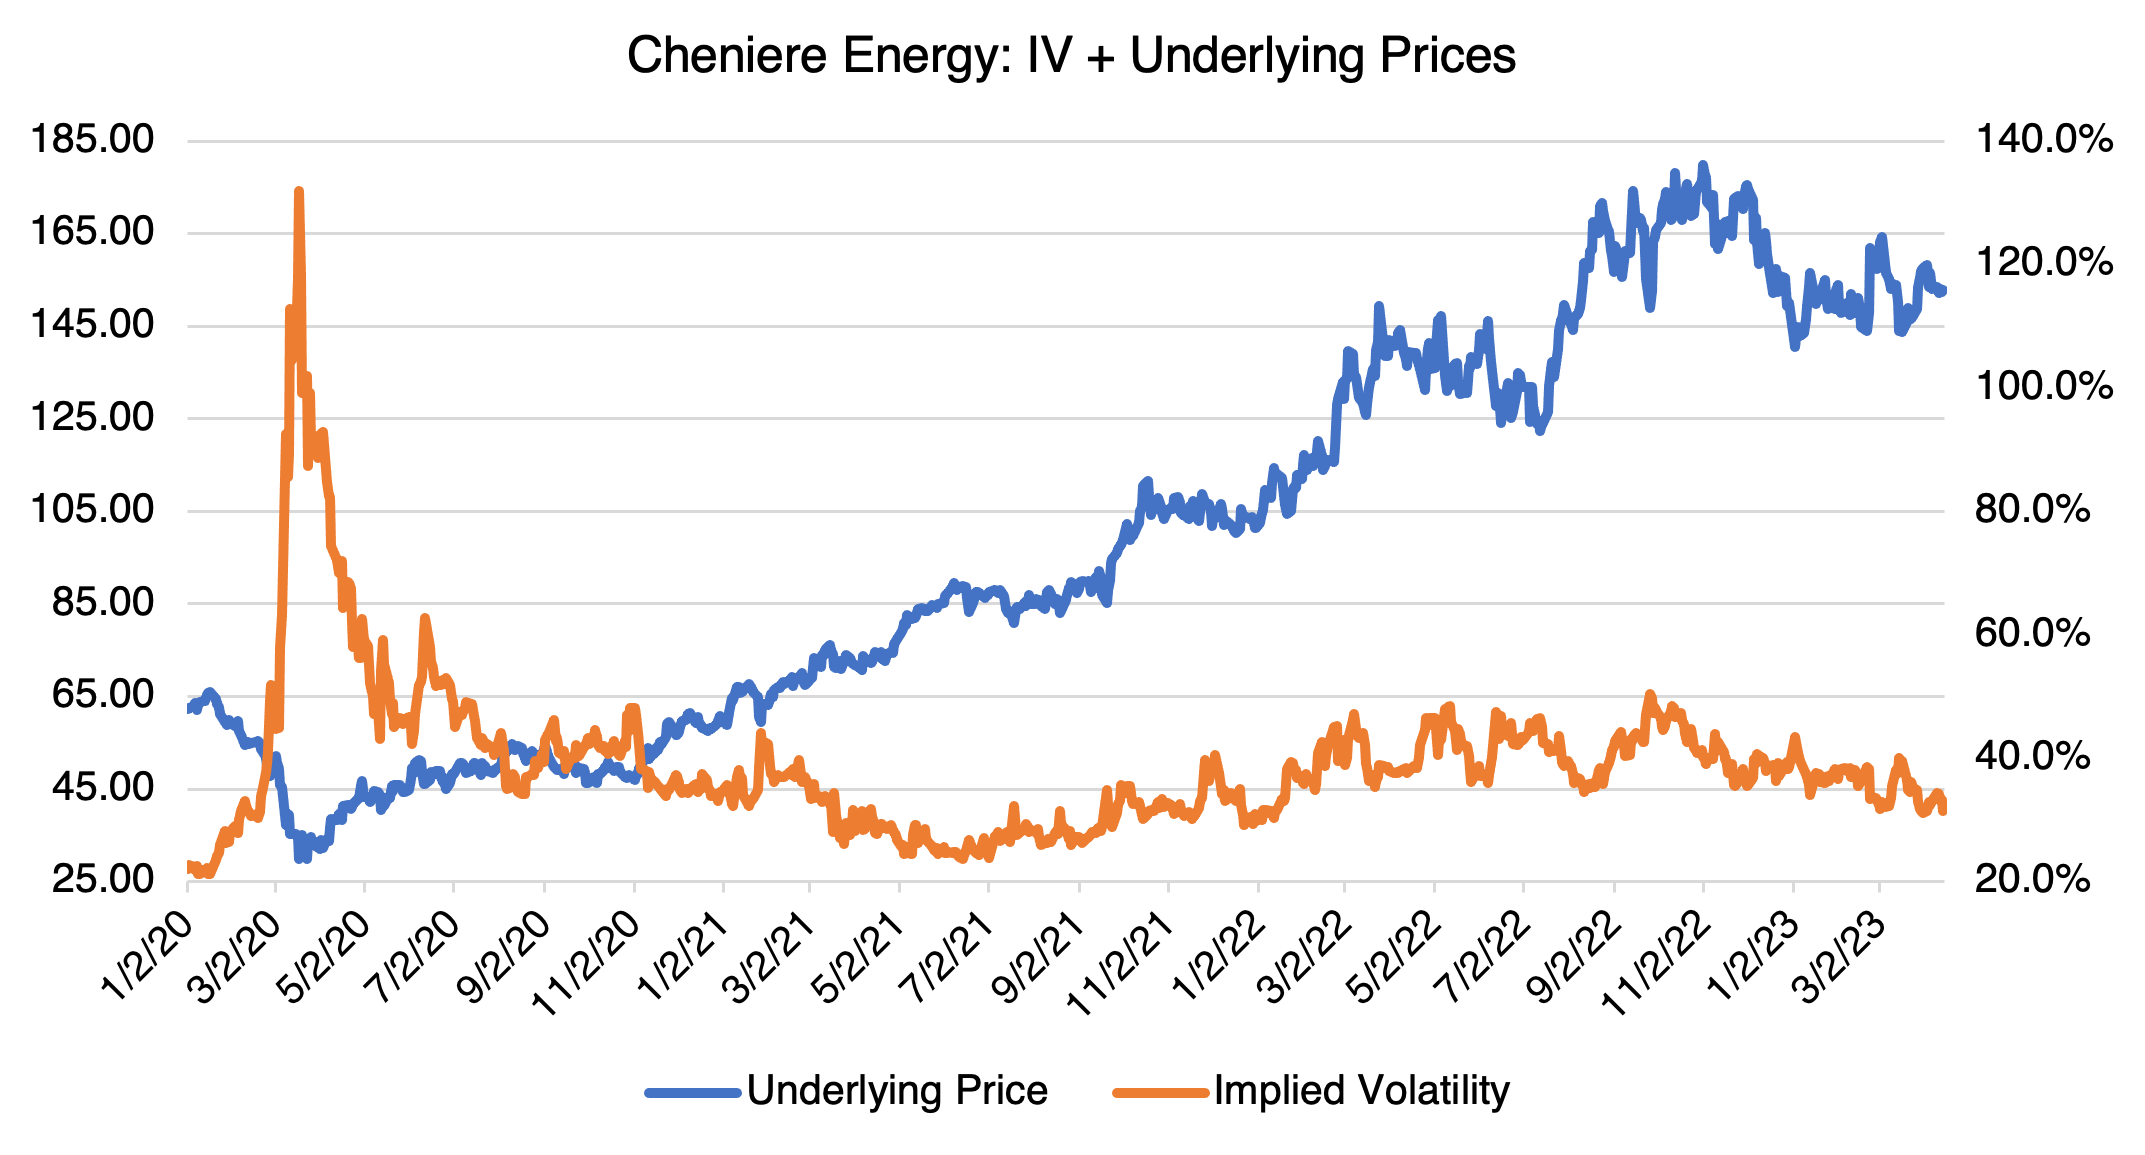 Cheniere Energy: IV + Underlying Prices